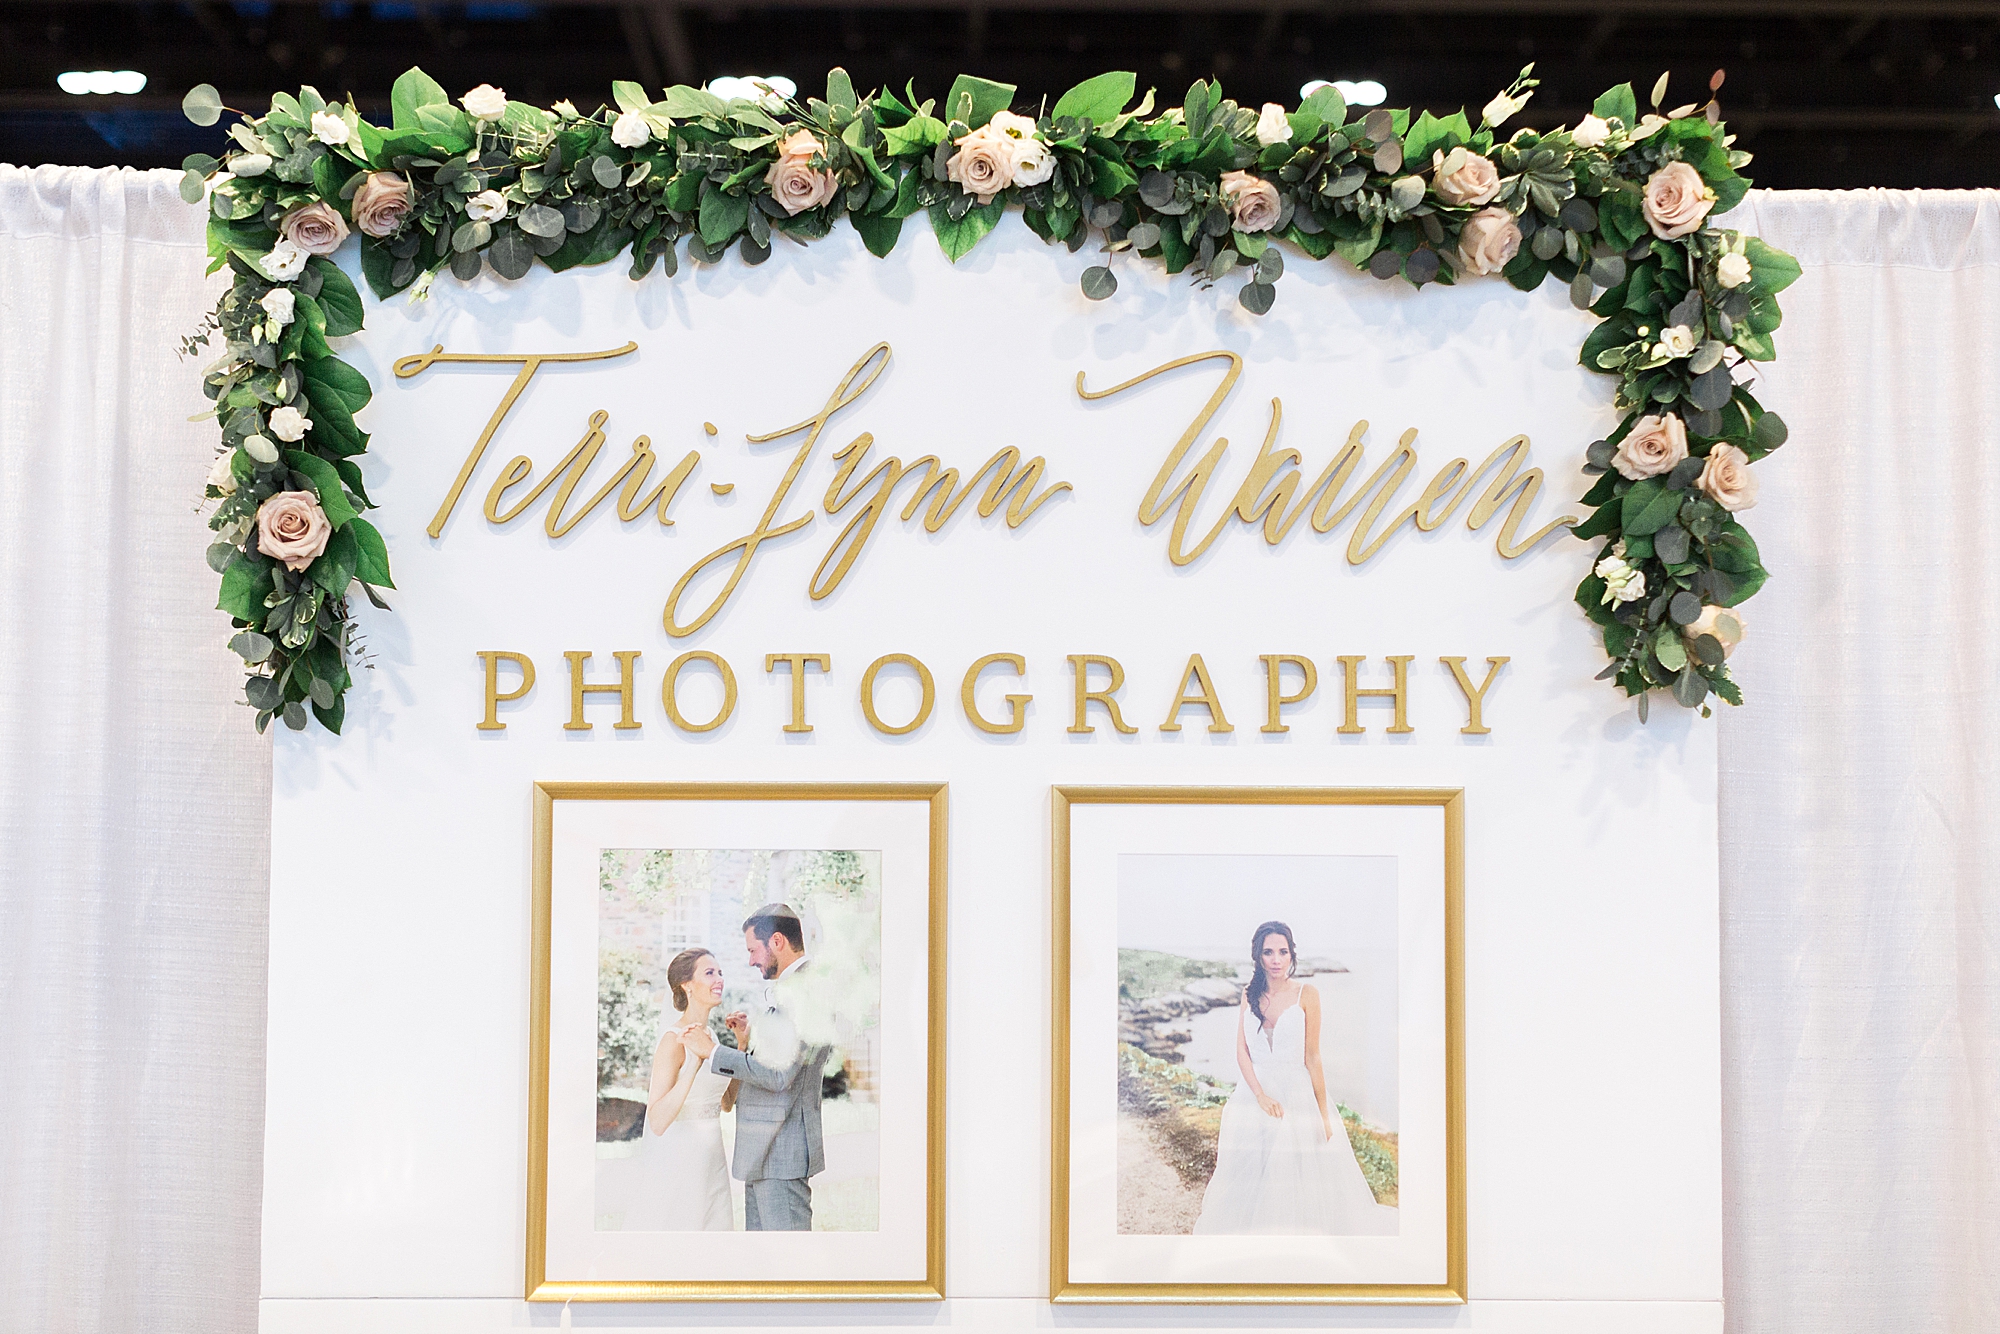 Wedding Photography Bridal Show Booth Display